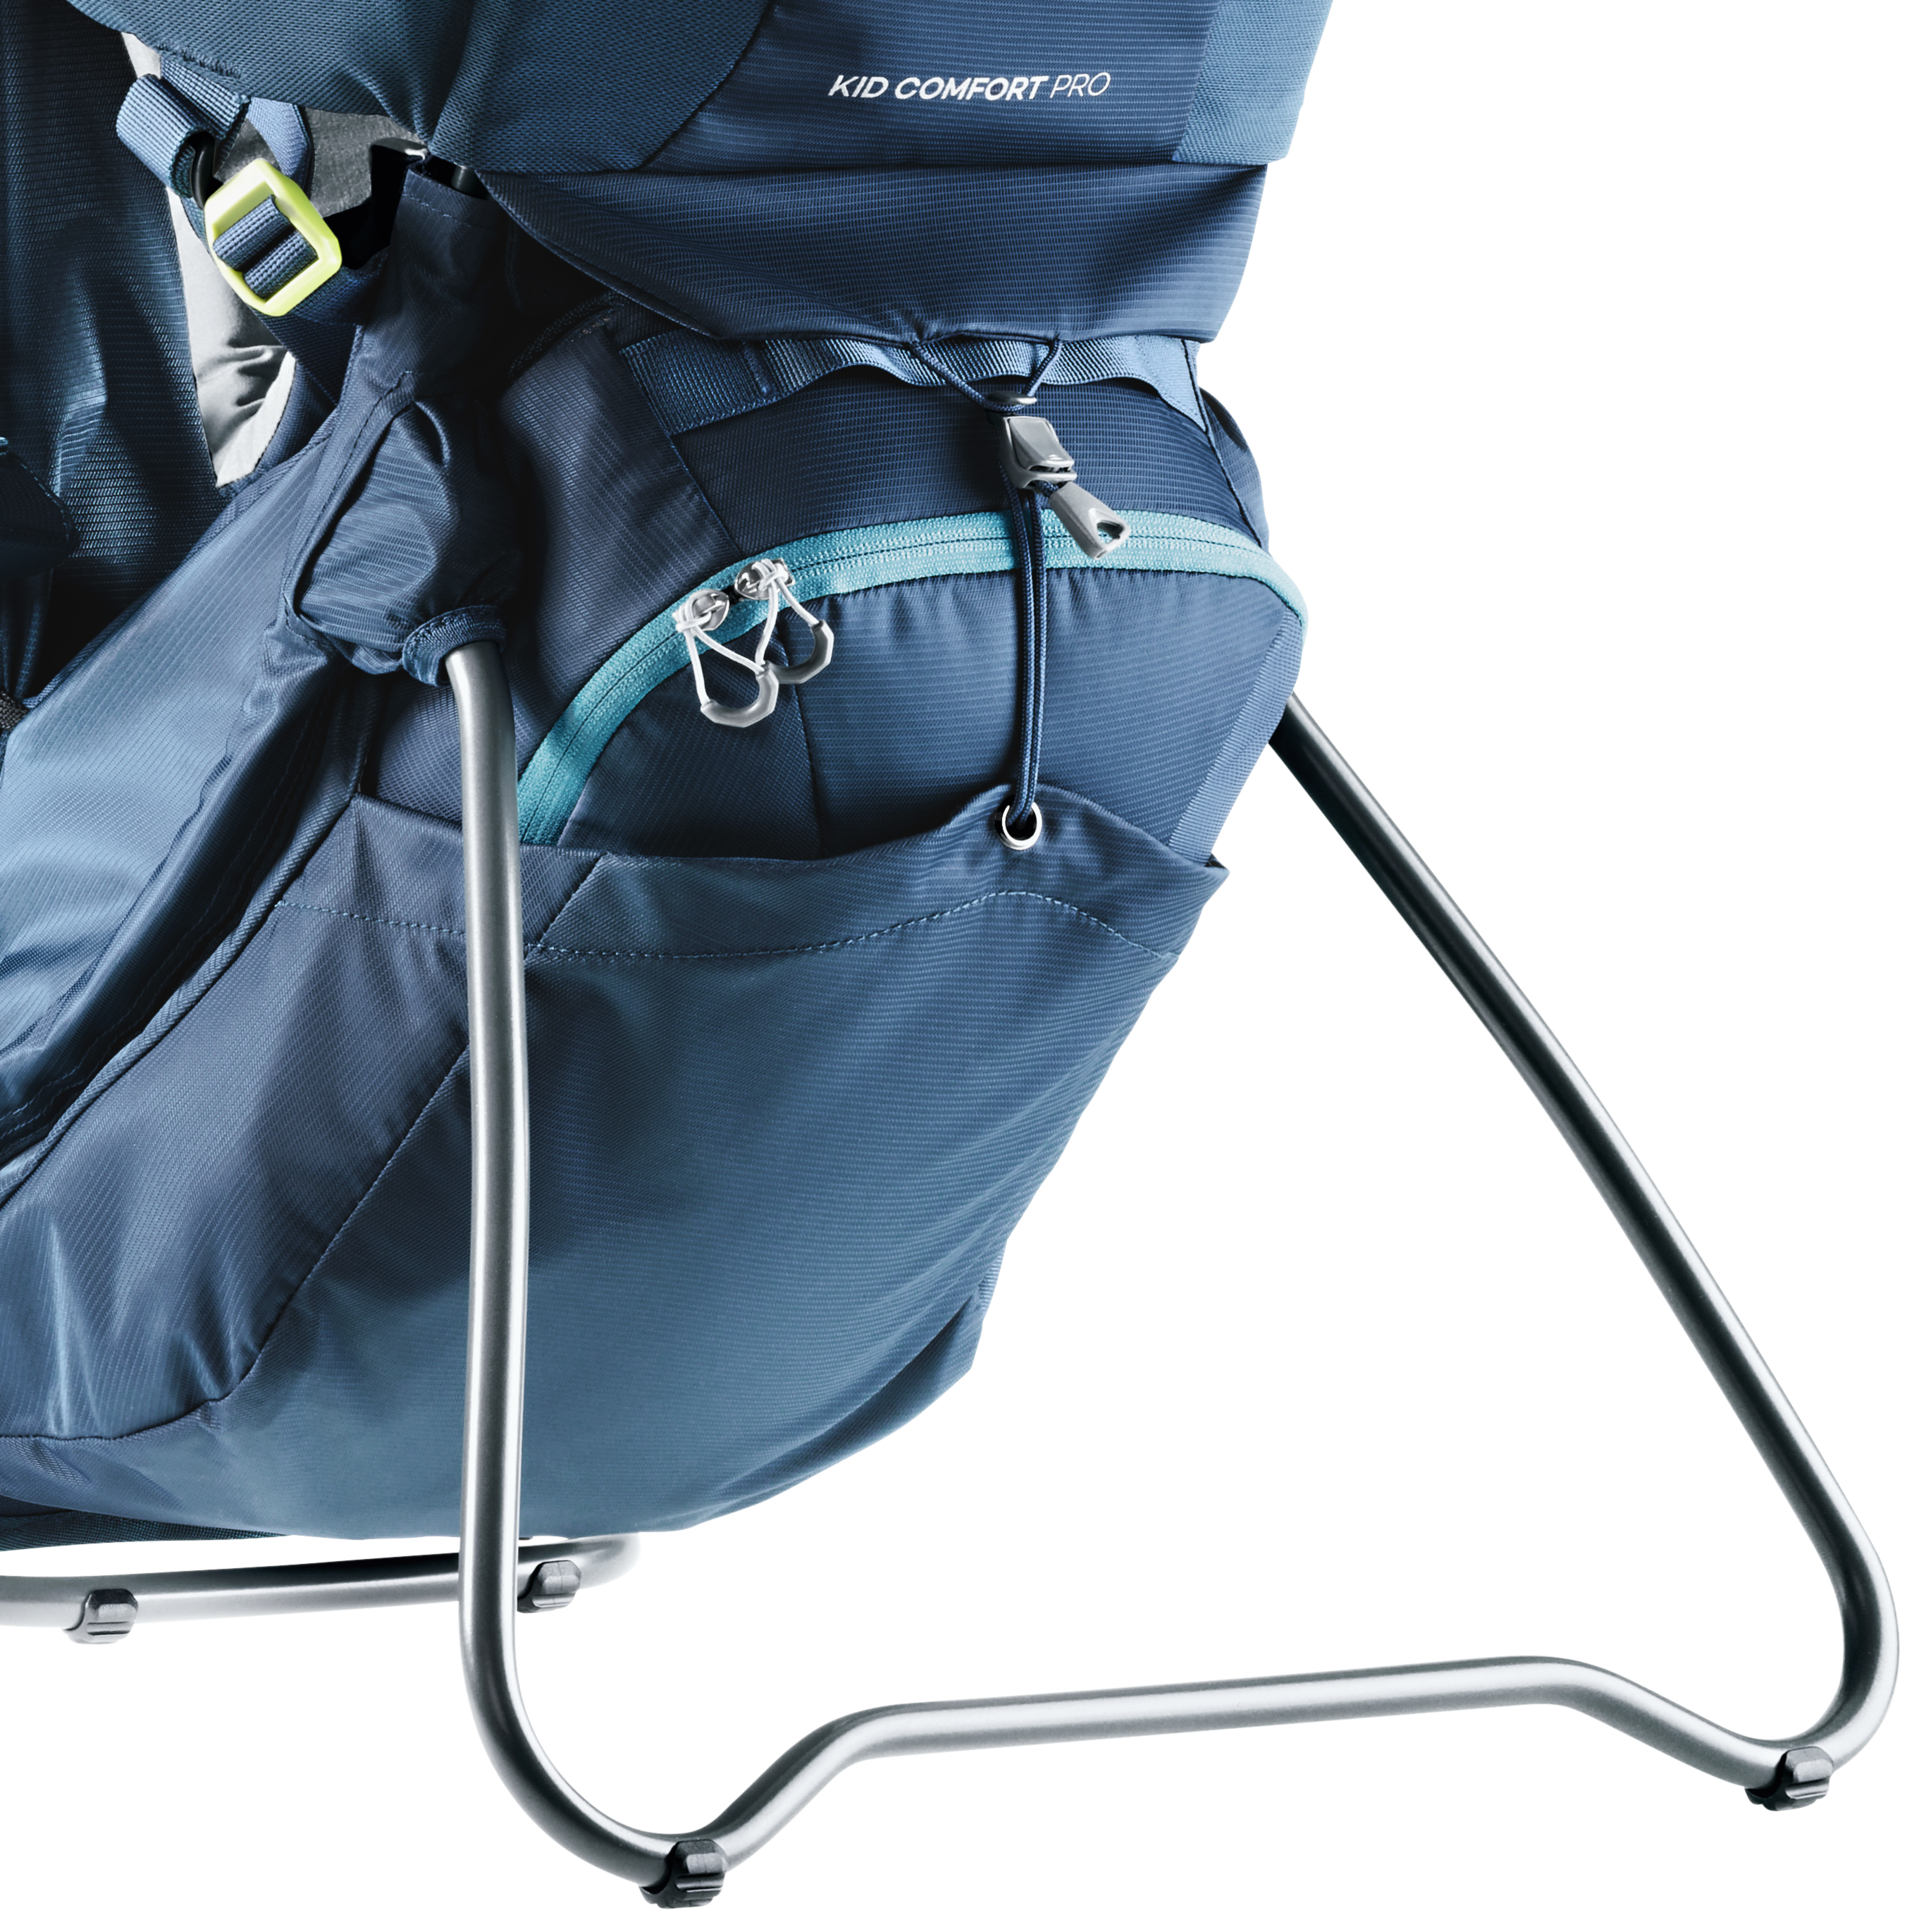 Mochila portabebés de alta calidad, con mochila extraíble, 2 en 1, para  senderismo con niños, carga a tu hijo ergonómicamente